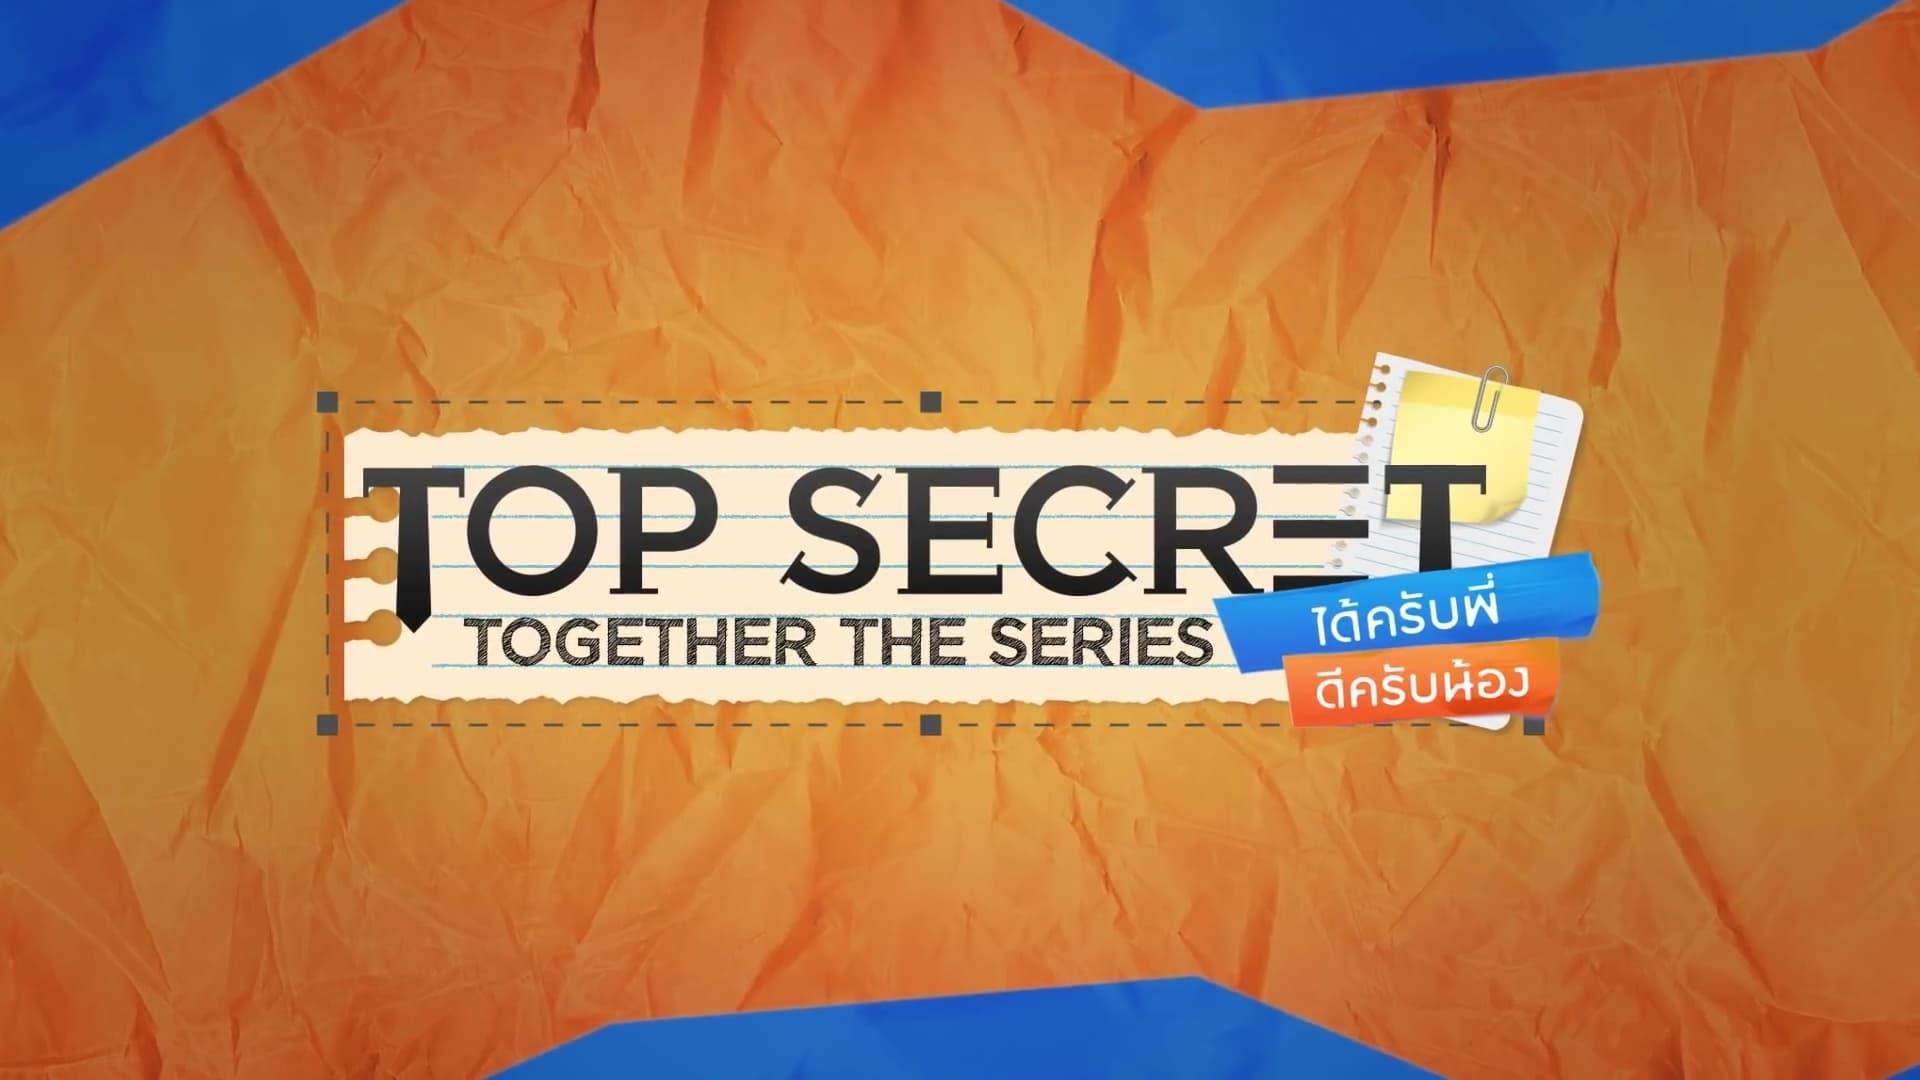 Top Secret Together The Series backdrop